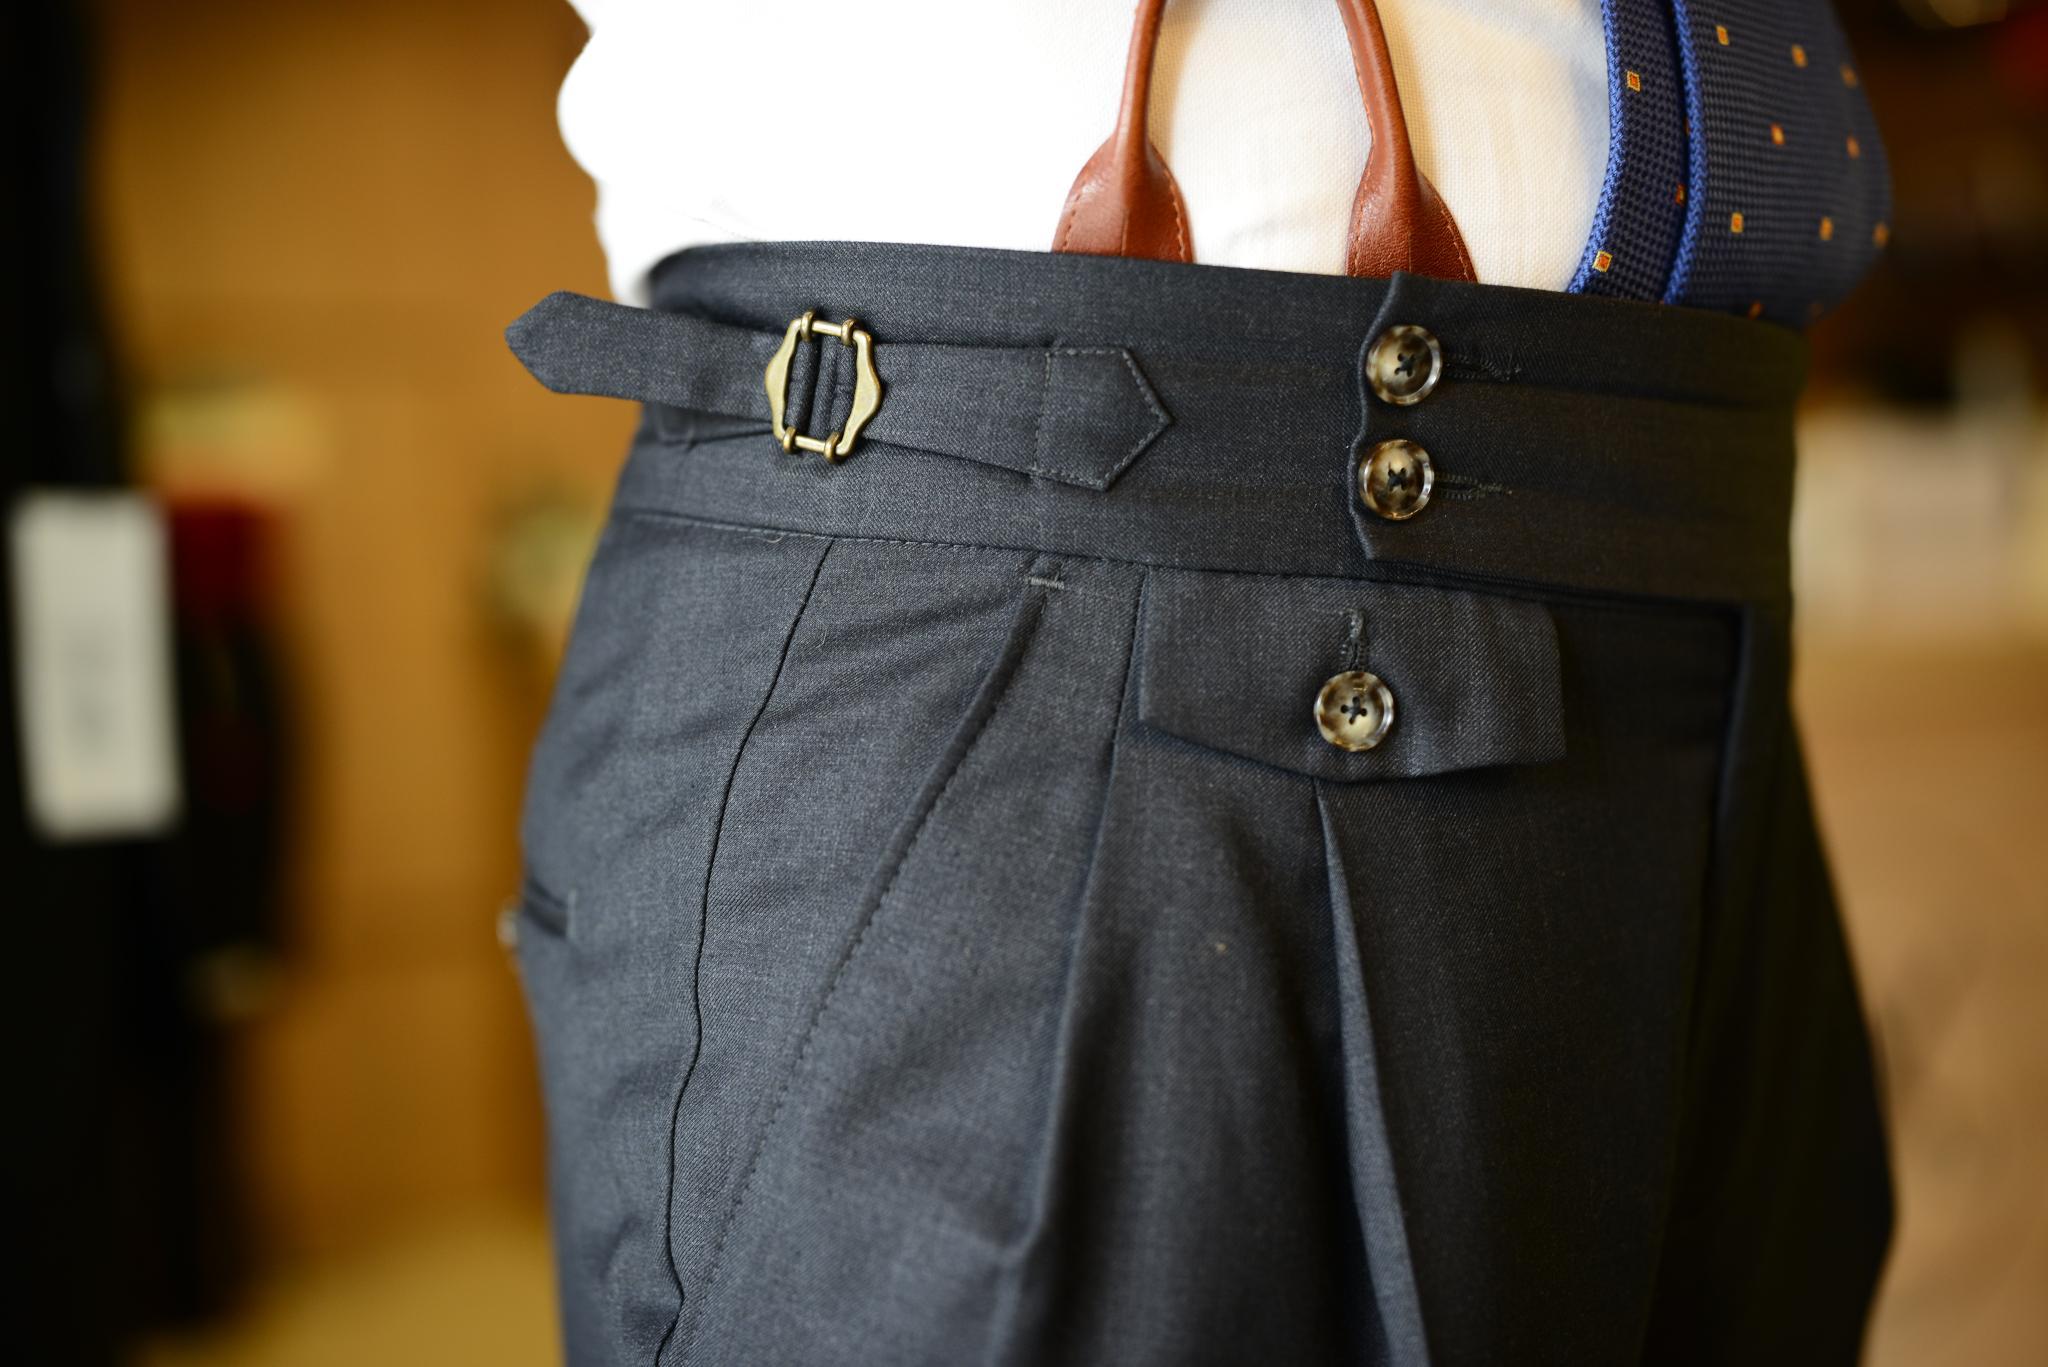 Spodnie garniturowe czarne